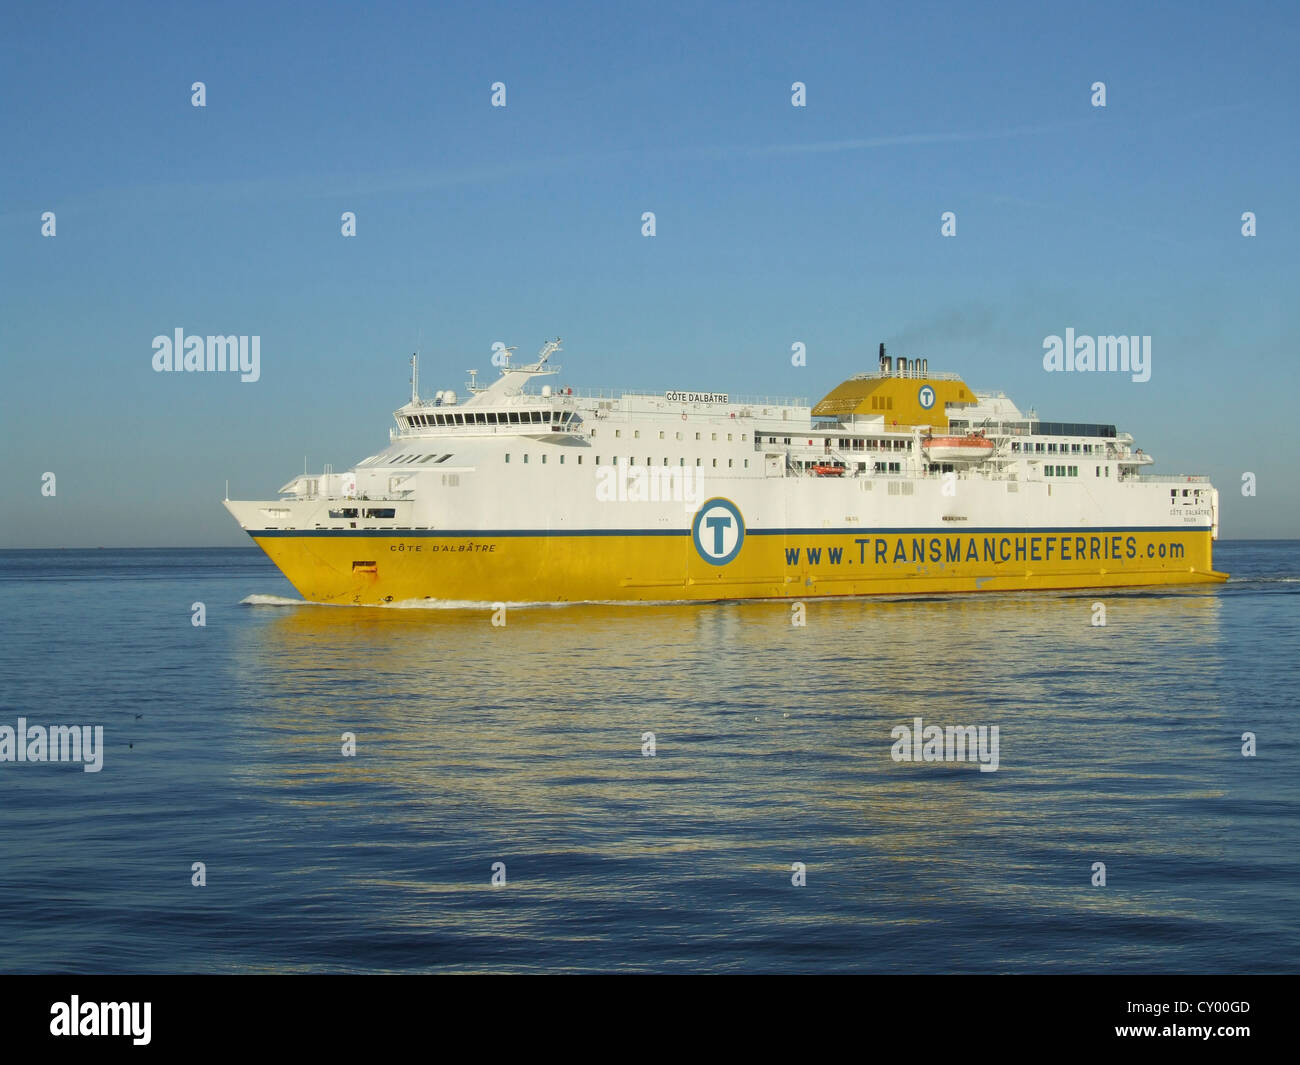 Transmanche Ferry, Le Havre, France Stock Photo - Alamy